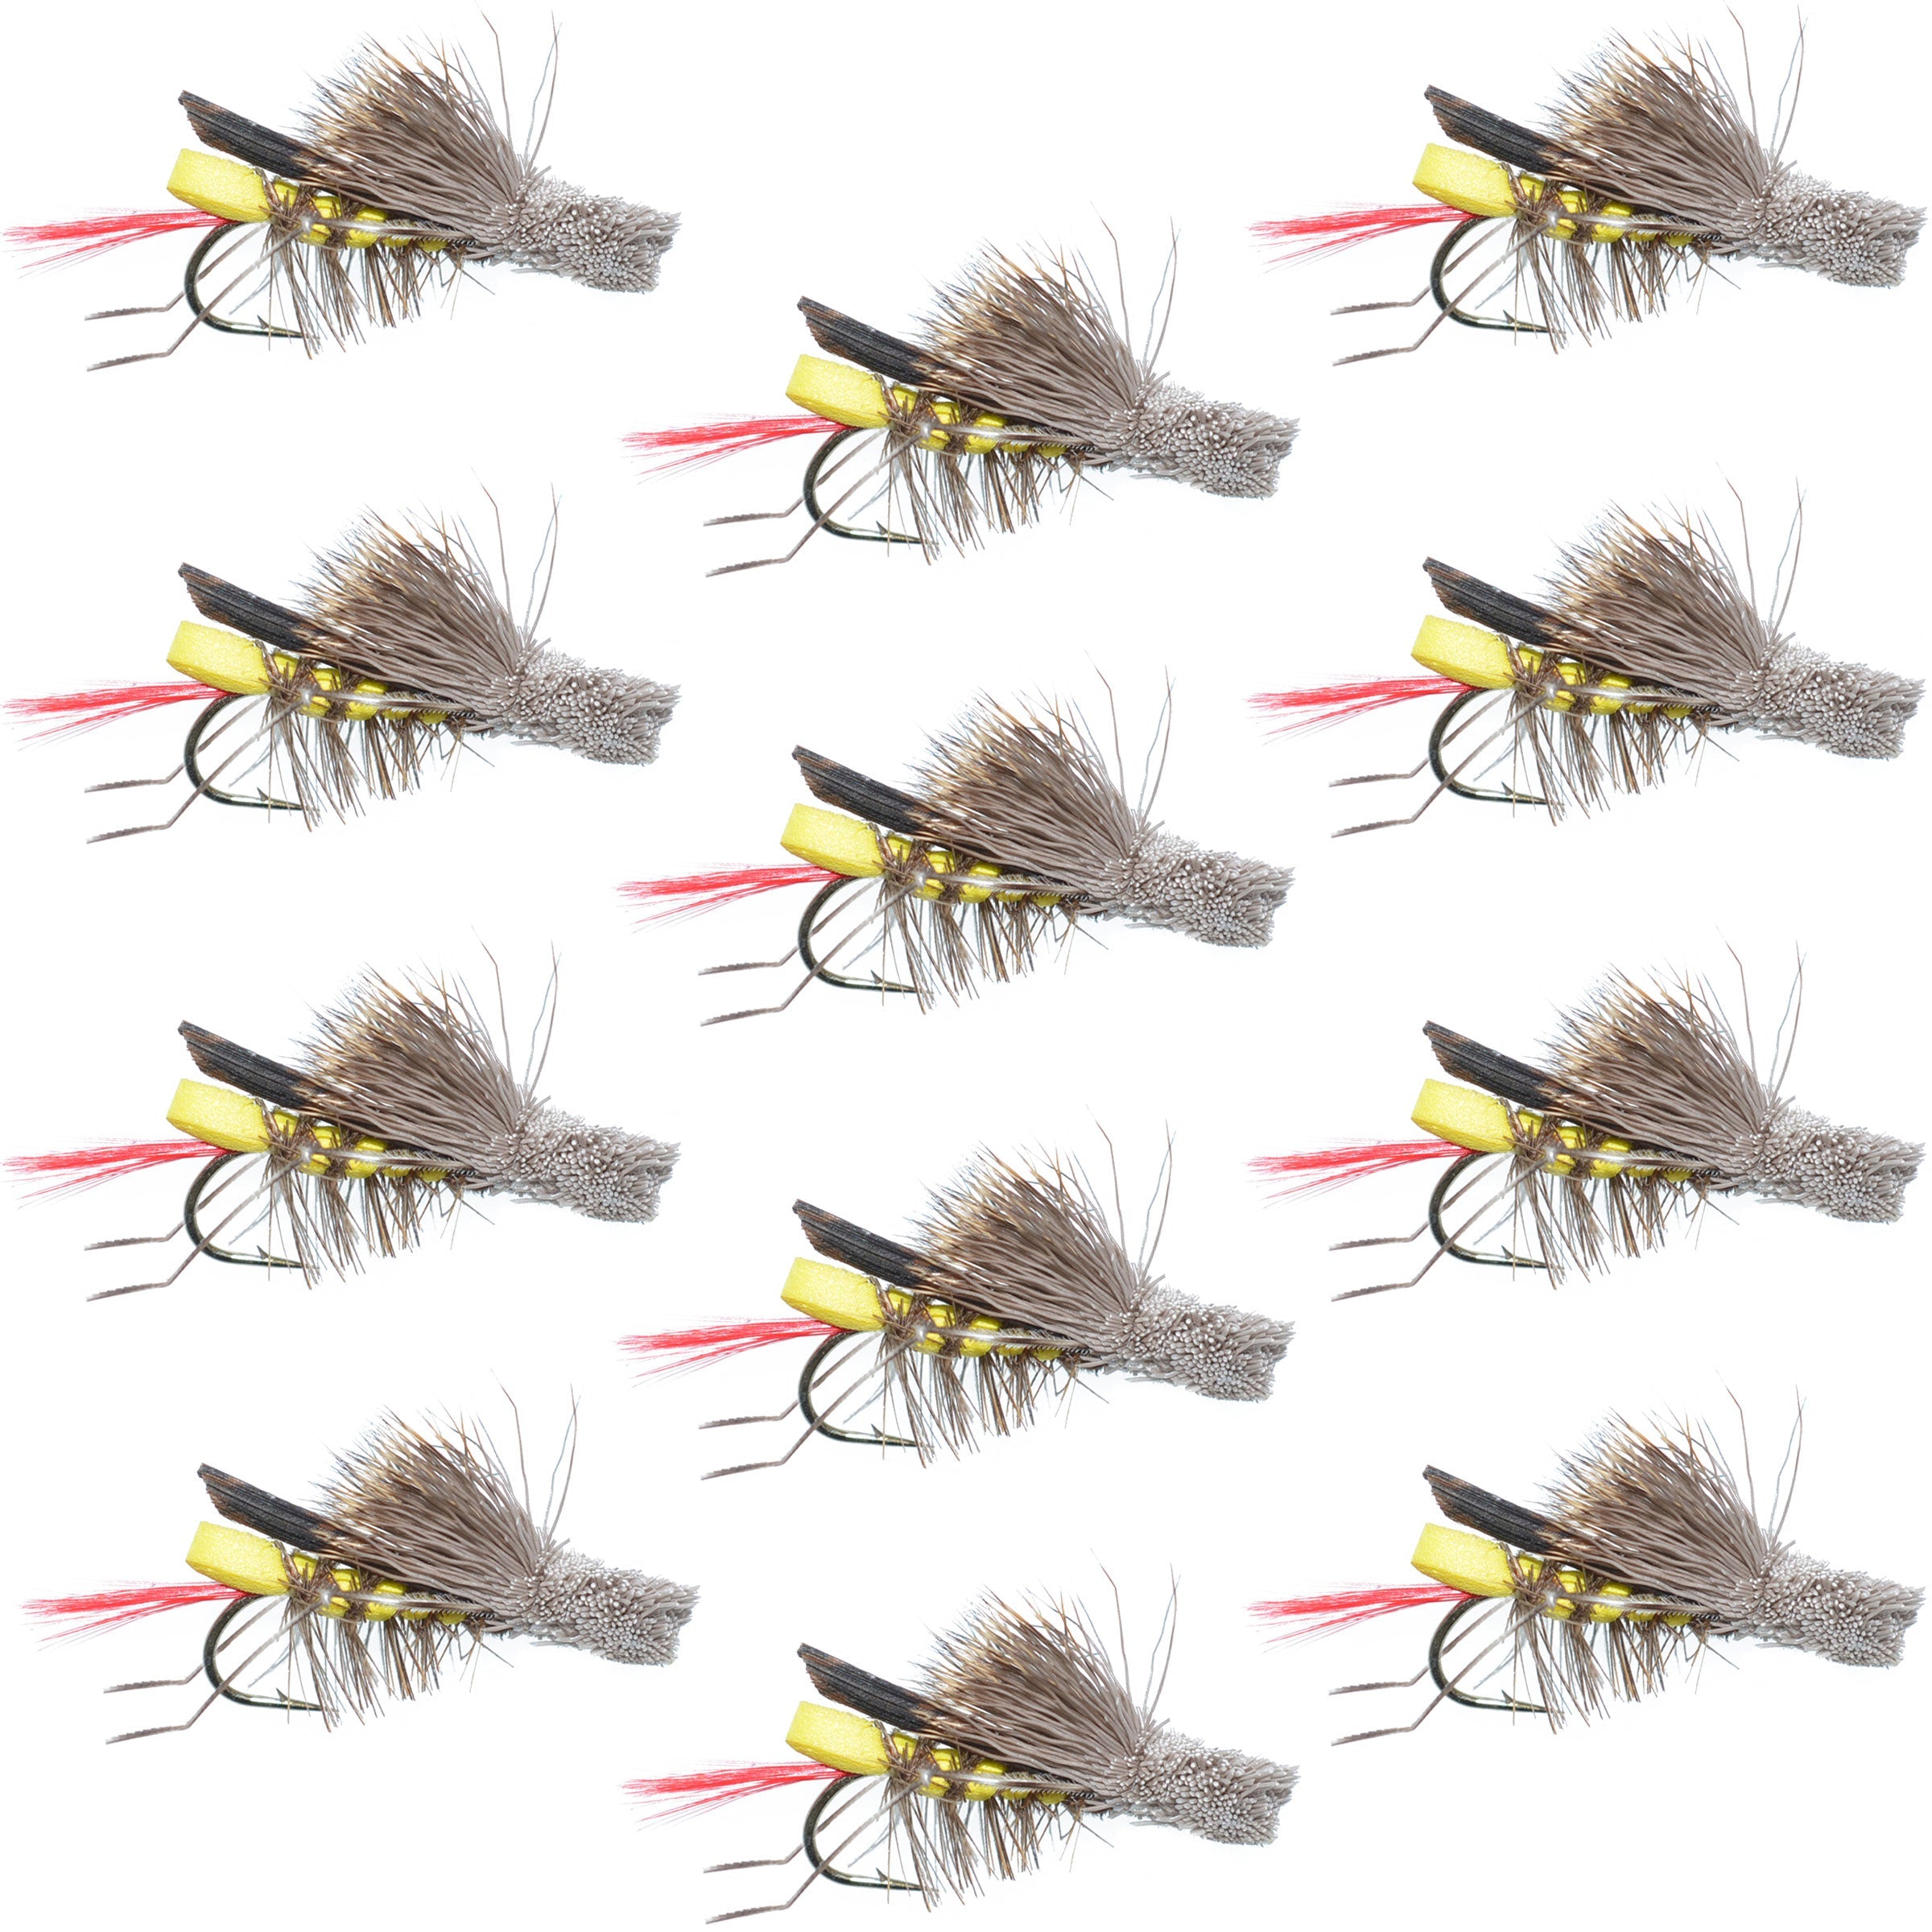 Dave's Hopper Yellow Foam Body Grasshopper Fly - 1 Dozen Flies Hook Size 10